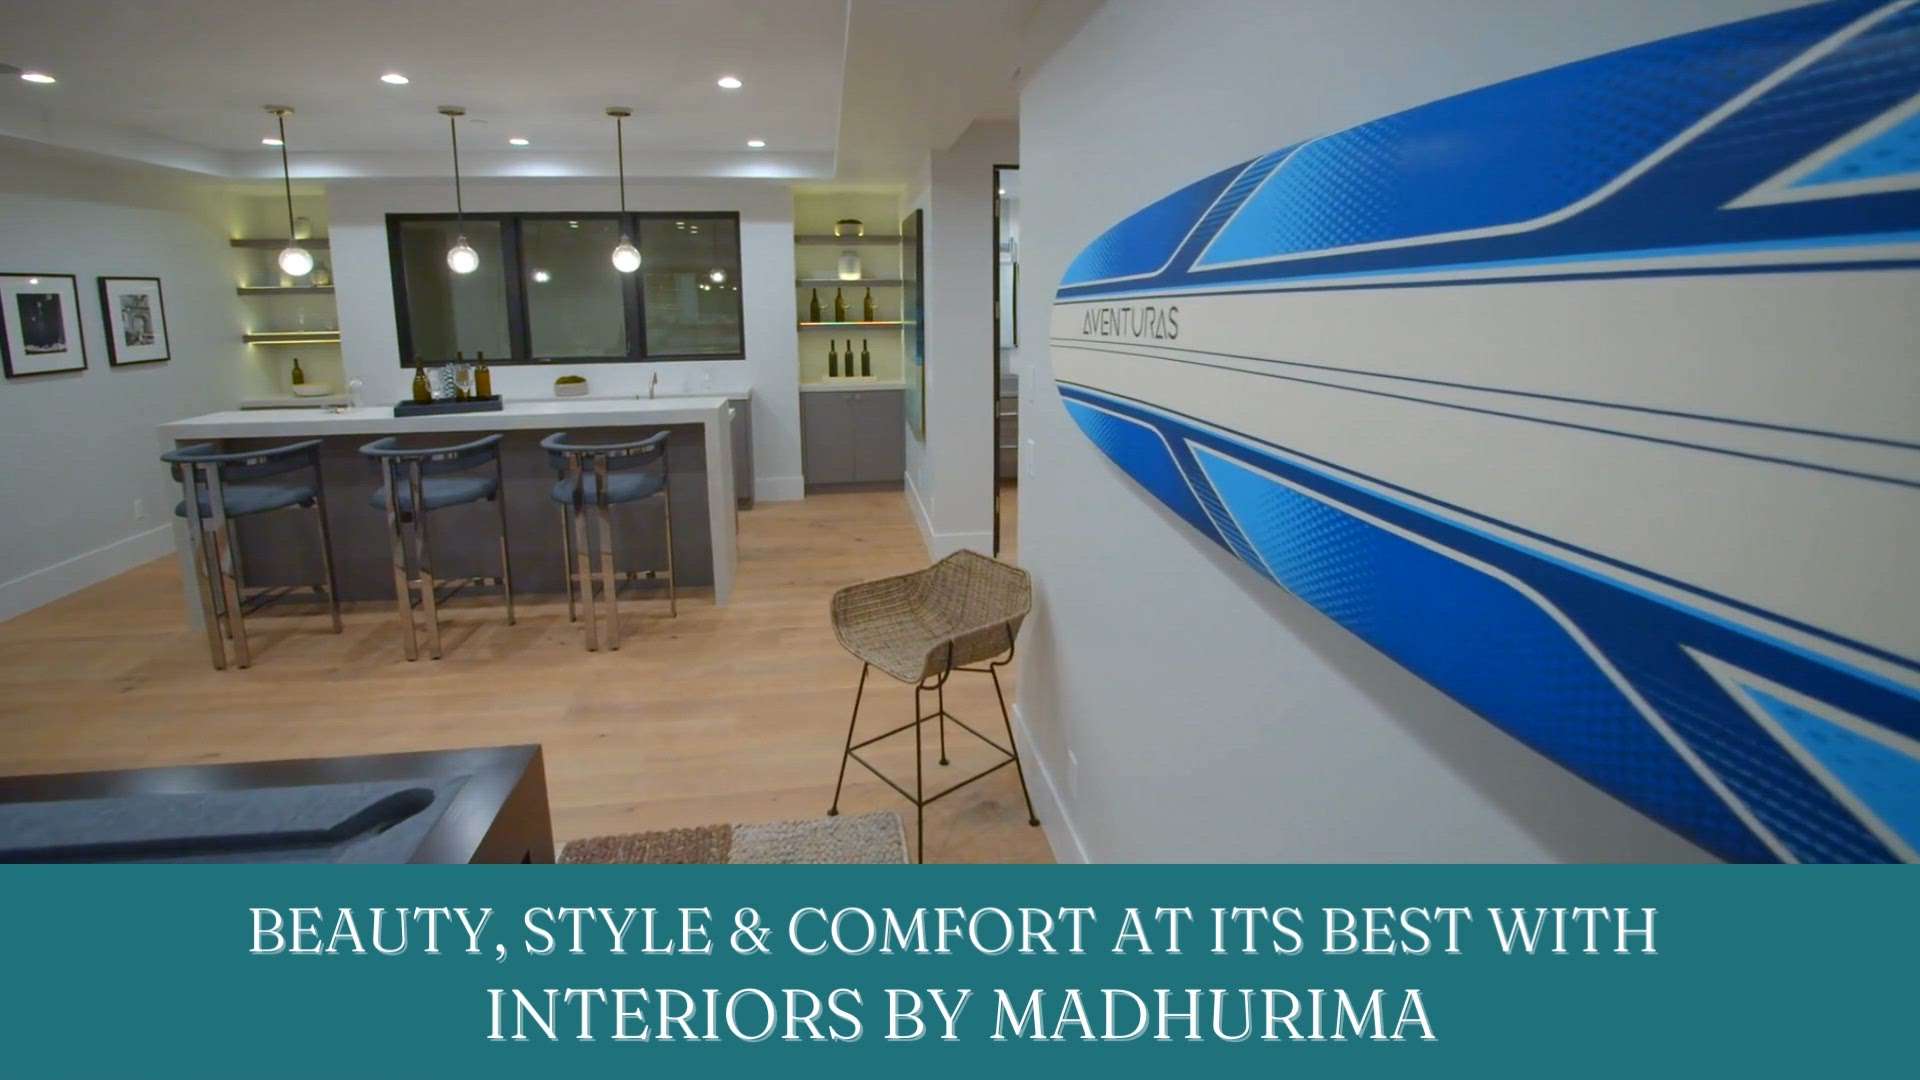 #IMInteriors
#InteriorsbyMadhurima
#kitchen
#bedroom
#moderndecor
#luxury
#drawingroom
#homesweethome
#DiningChairs